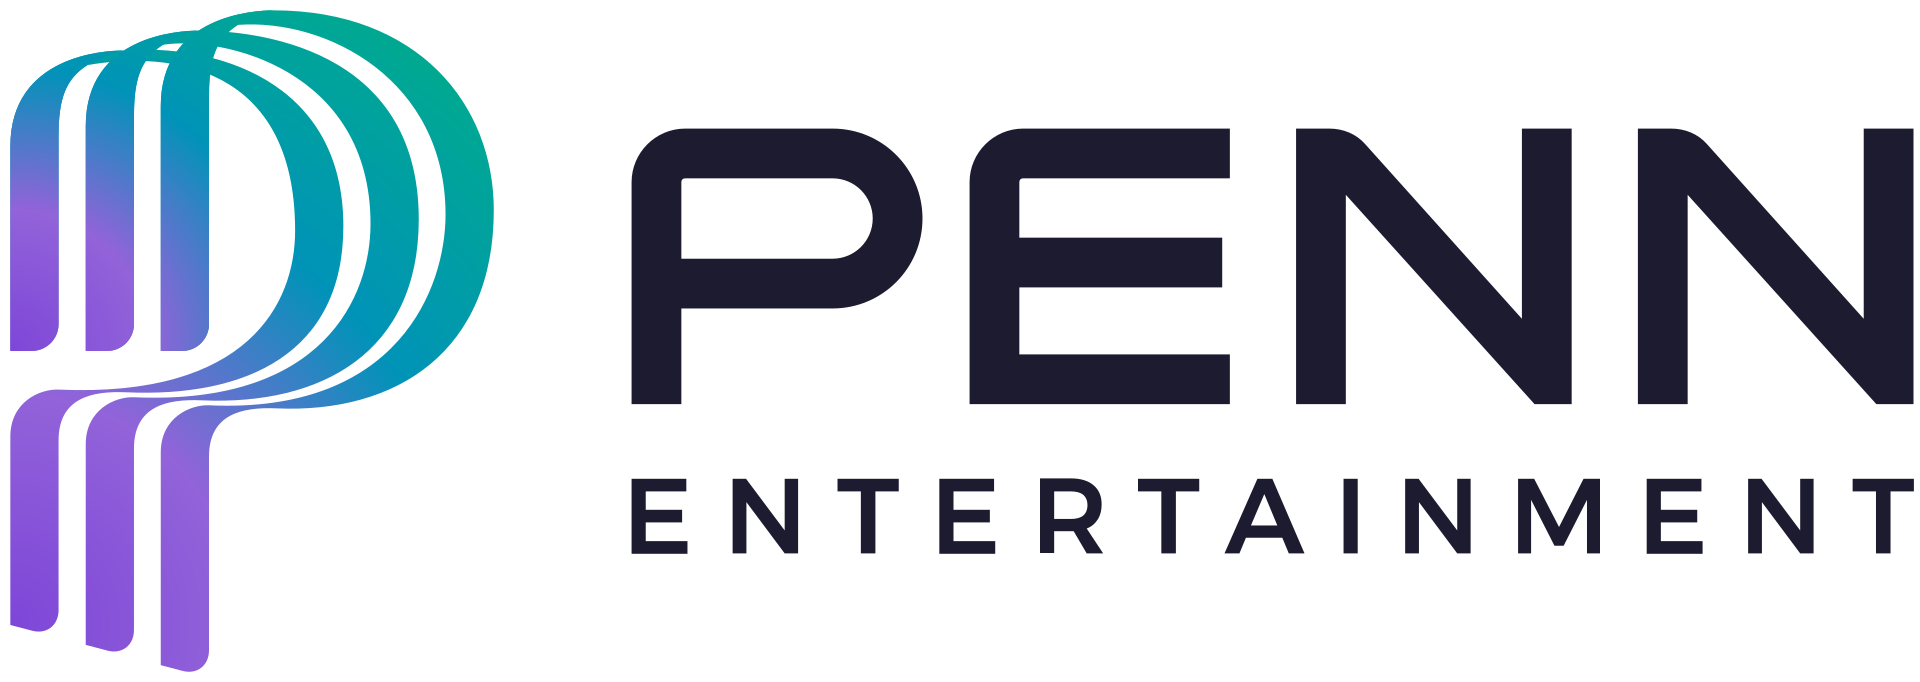 Penn Entertainment Brand Logo